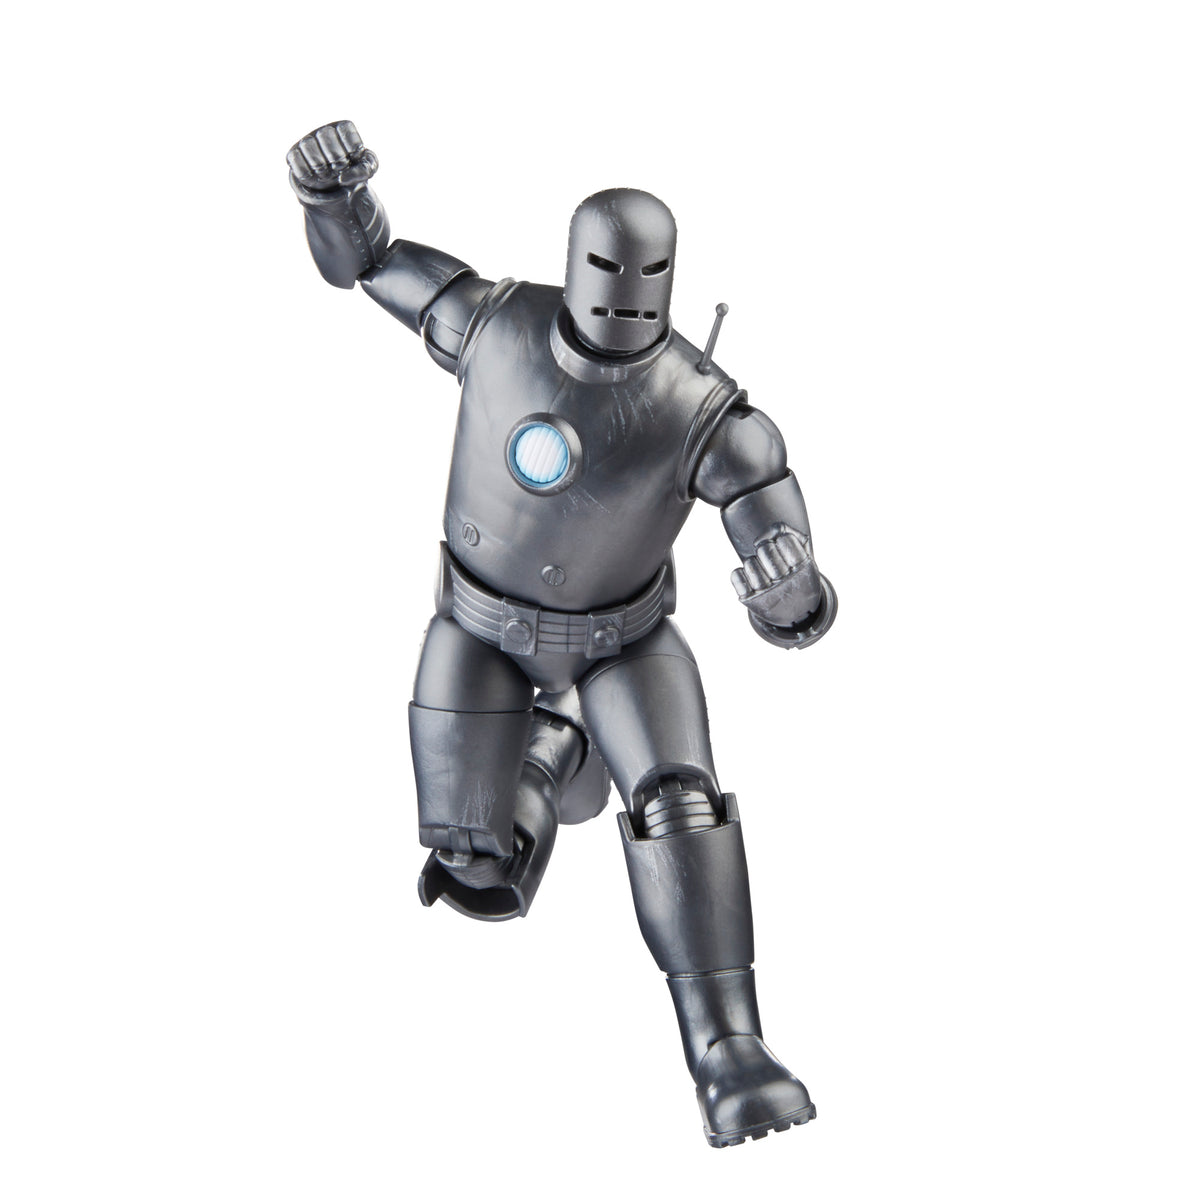 Avengers marvel legends figurine iron man (model 01) 15 cm